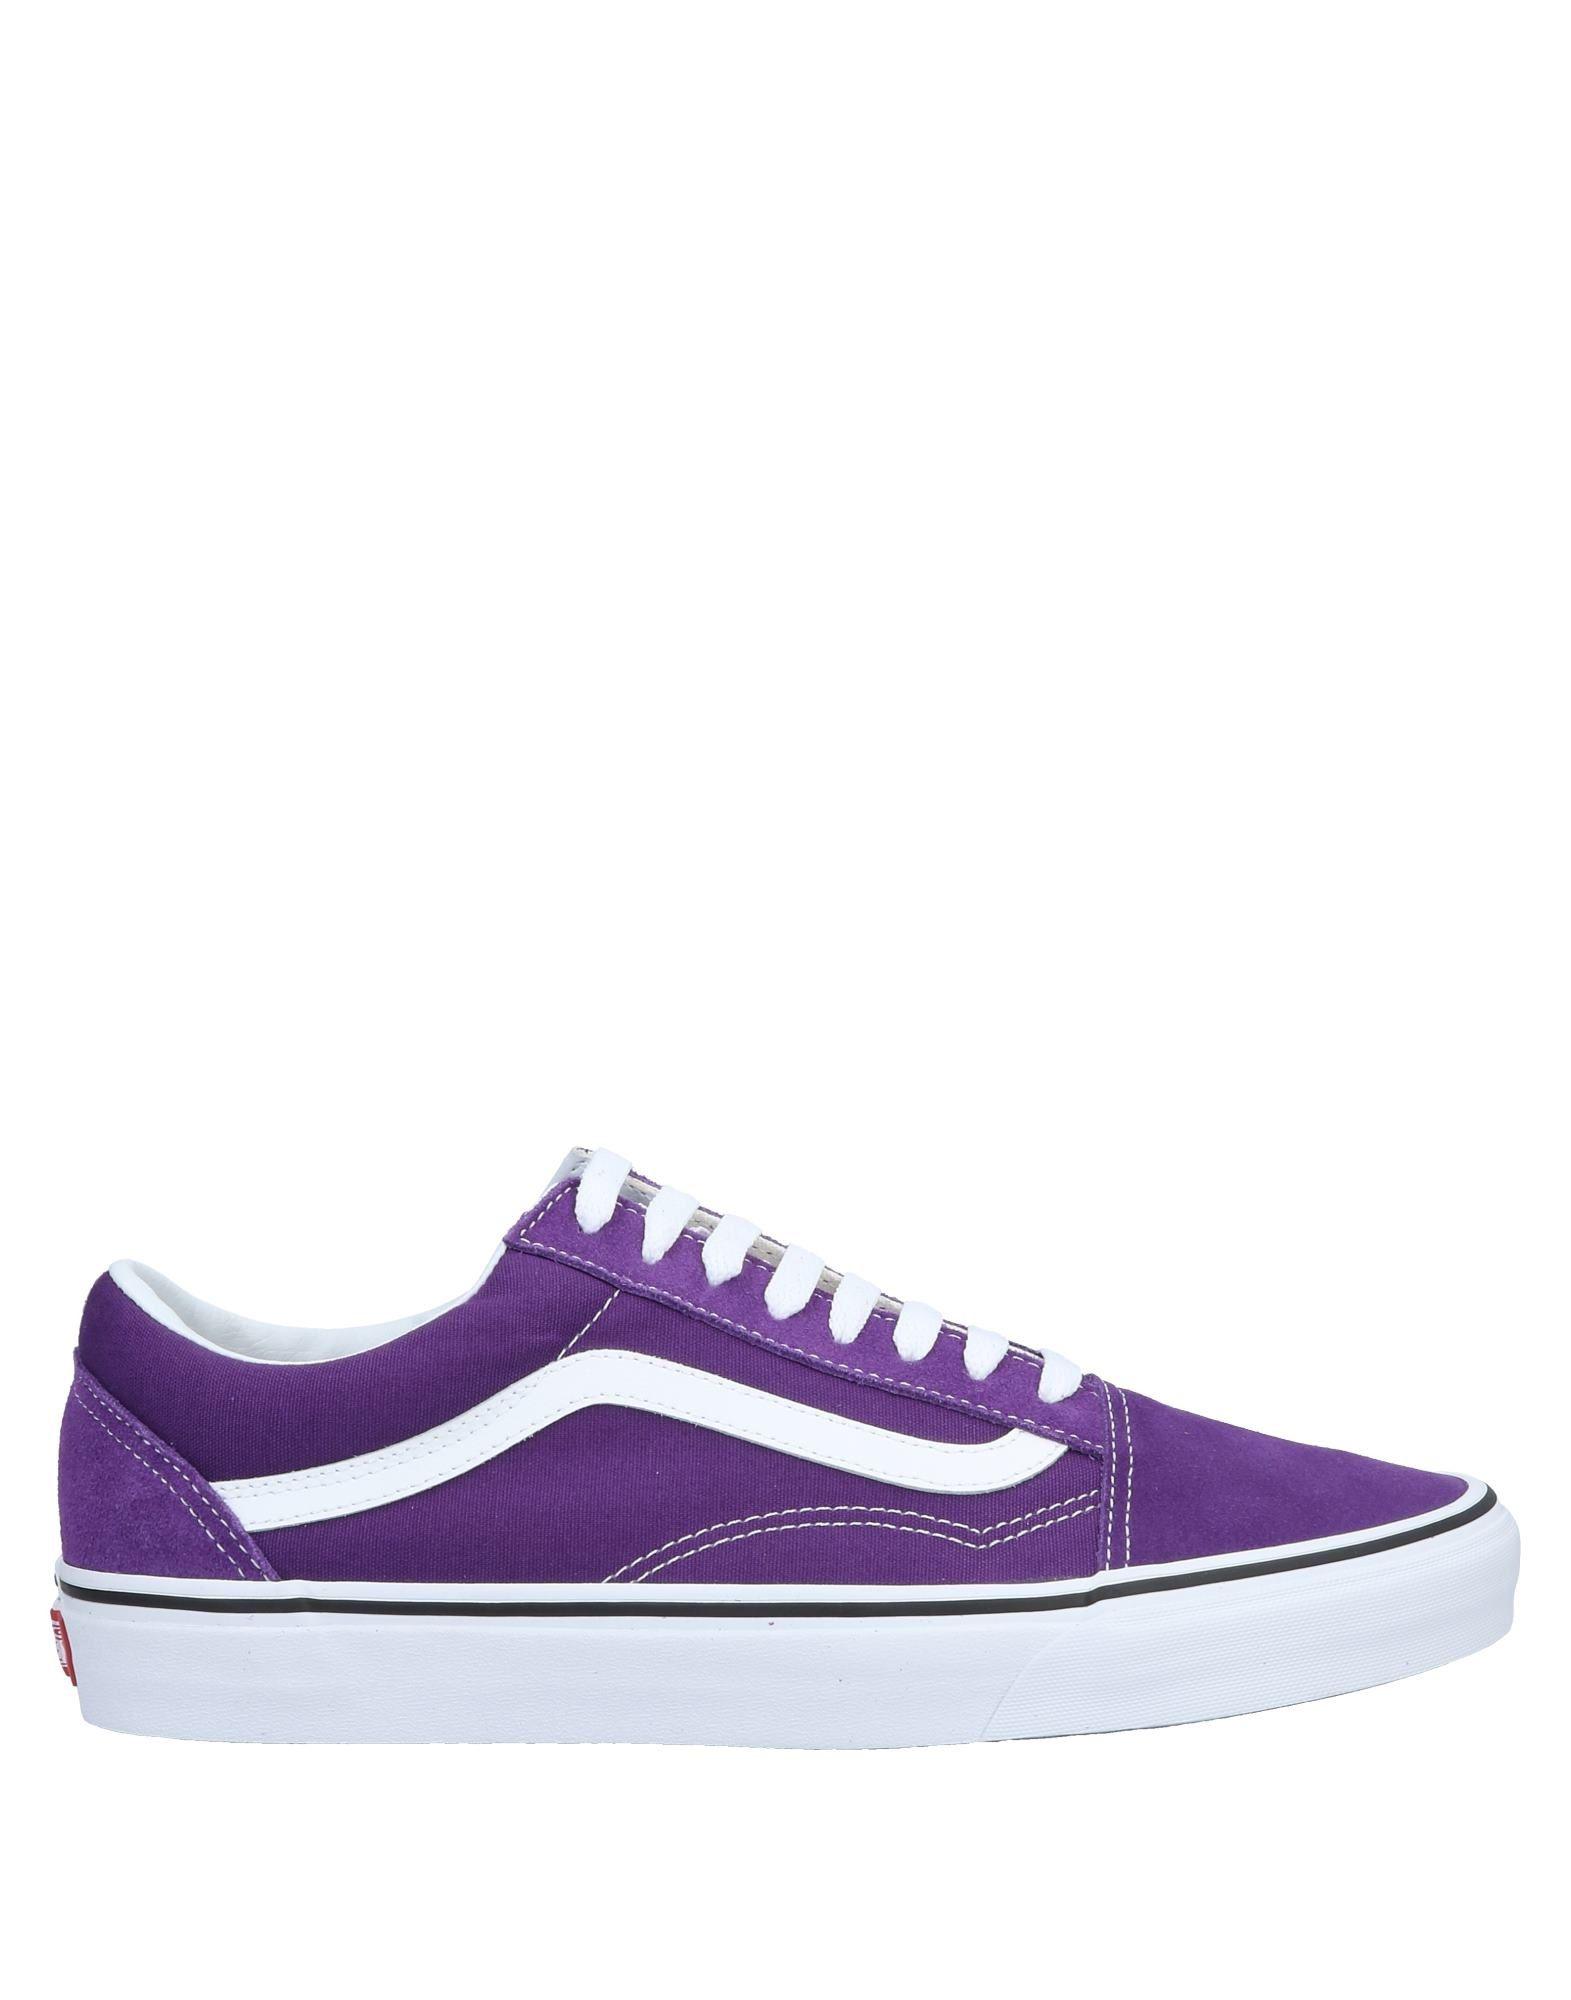 Vans Canvas Violet Old Skool Shoes in Purple for Men - Lyst